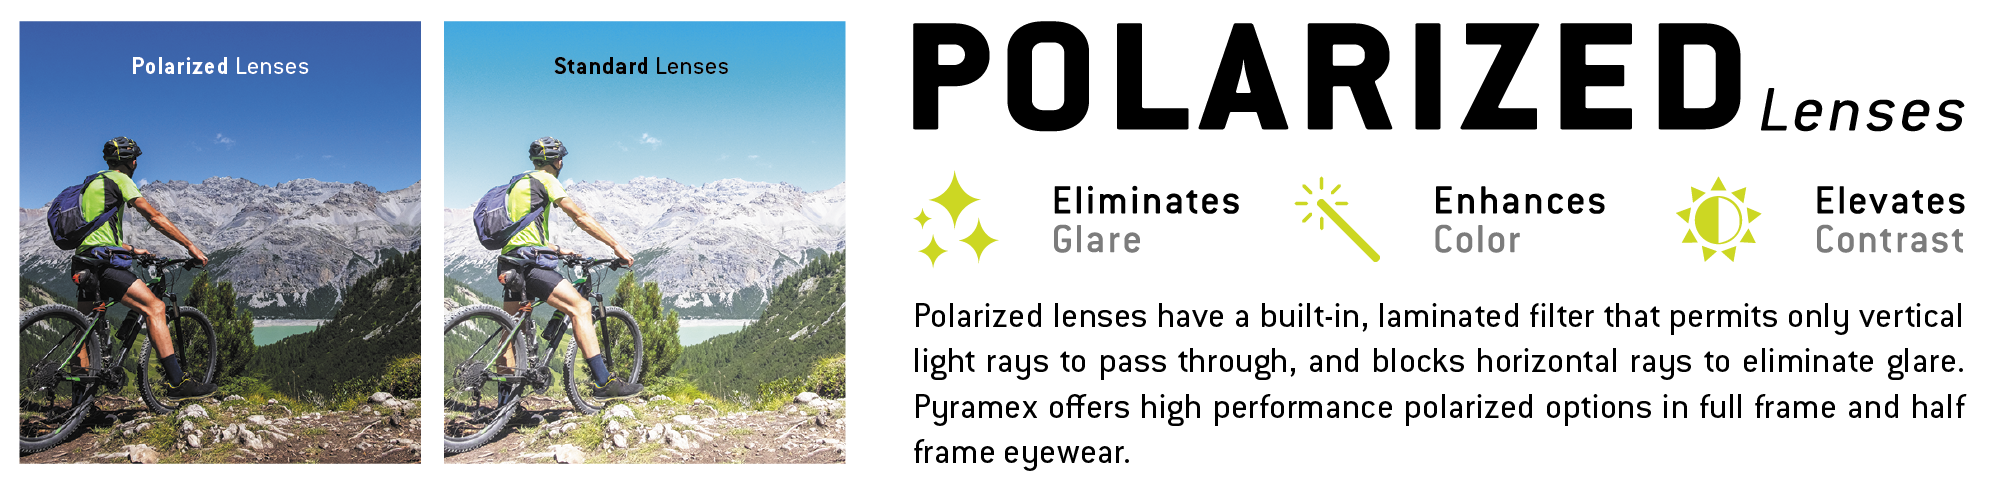 Polarized Lenses